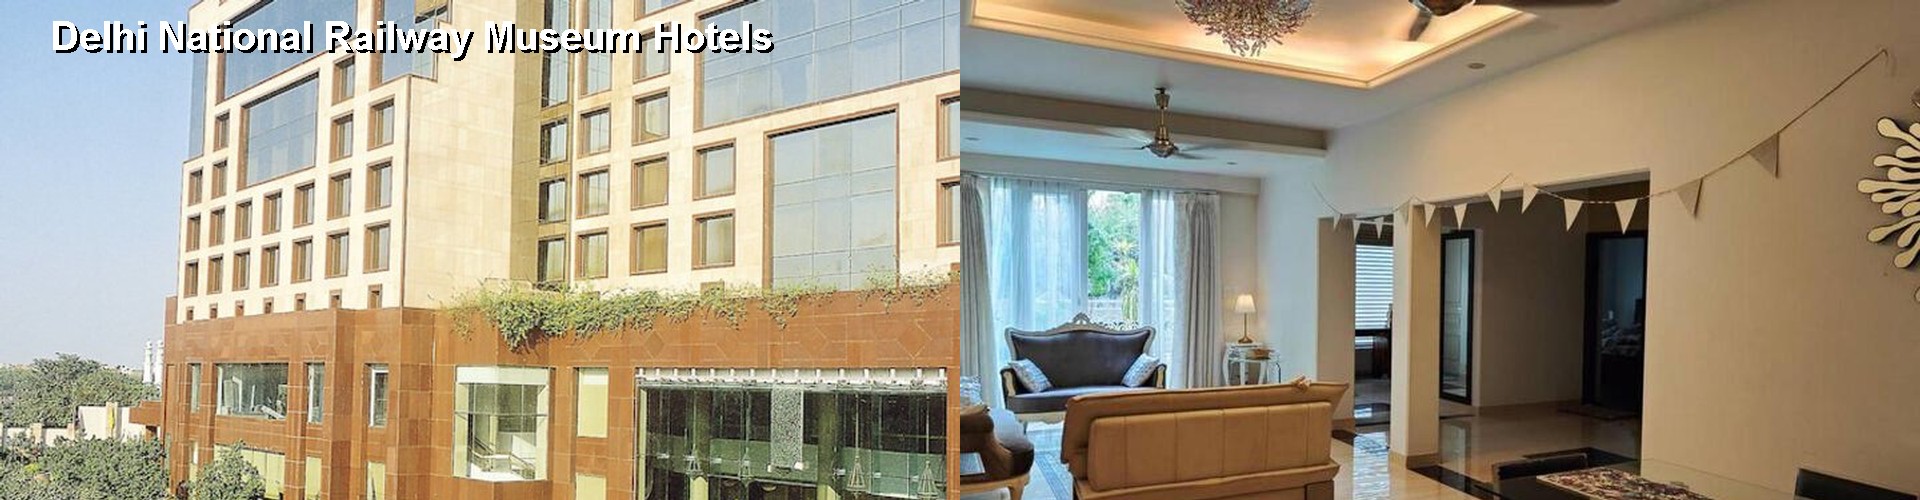 5 Best Hotels near Delhi National Railway Museum